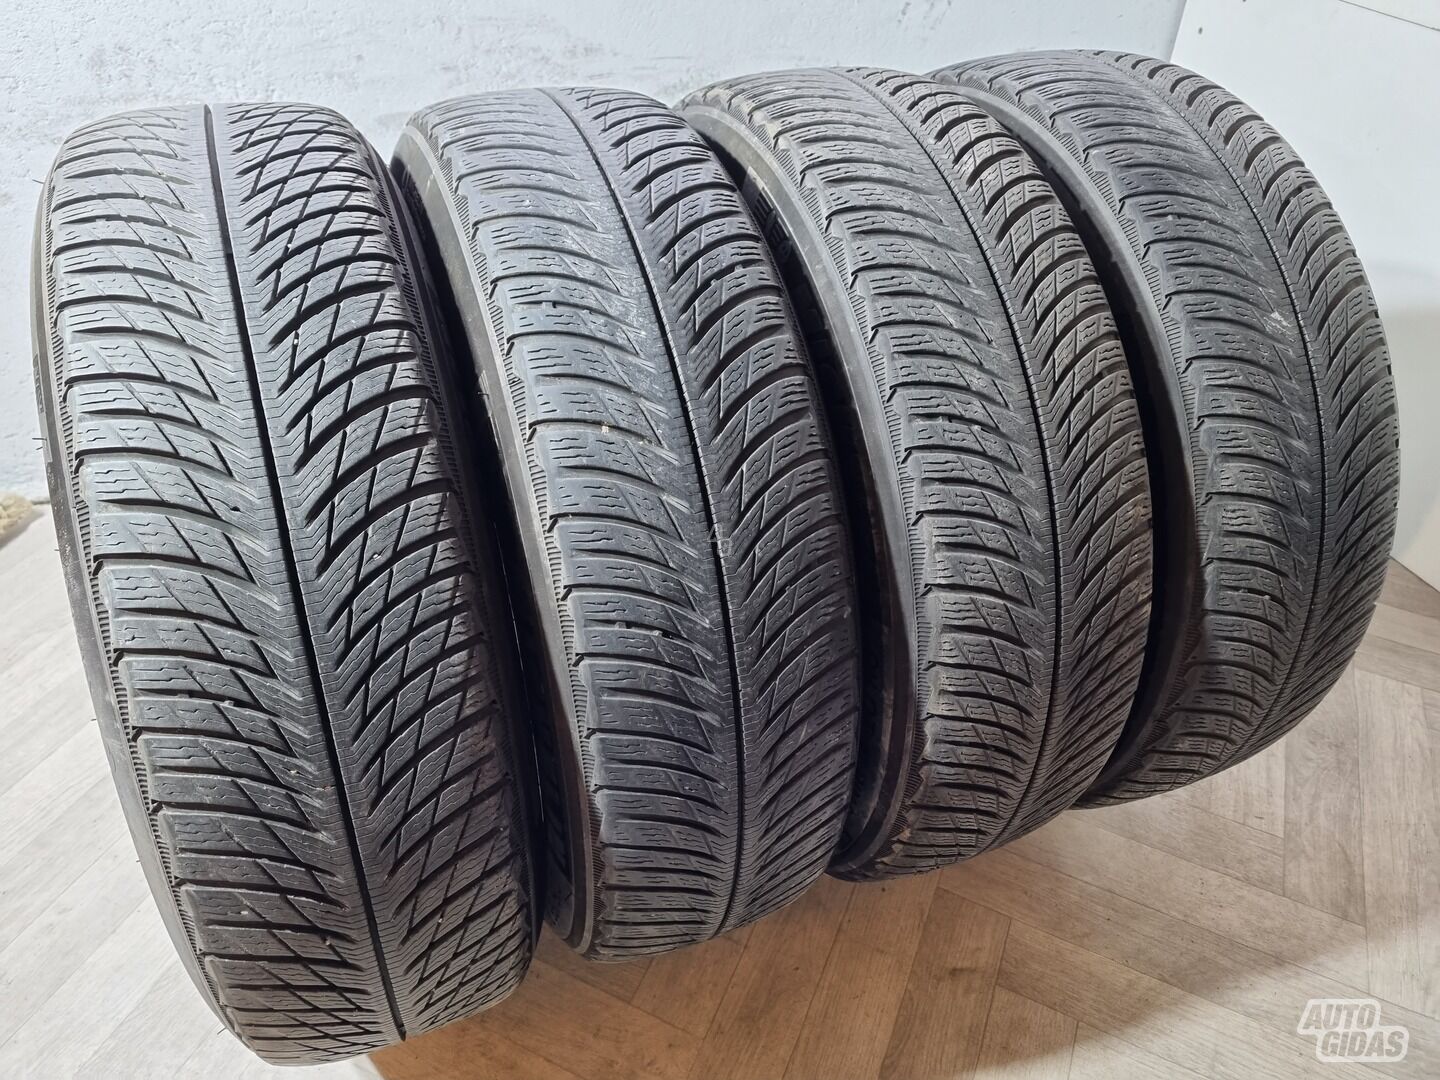 Michelin 2020m R17 winter tyres passanger car